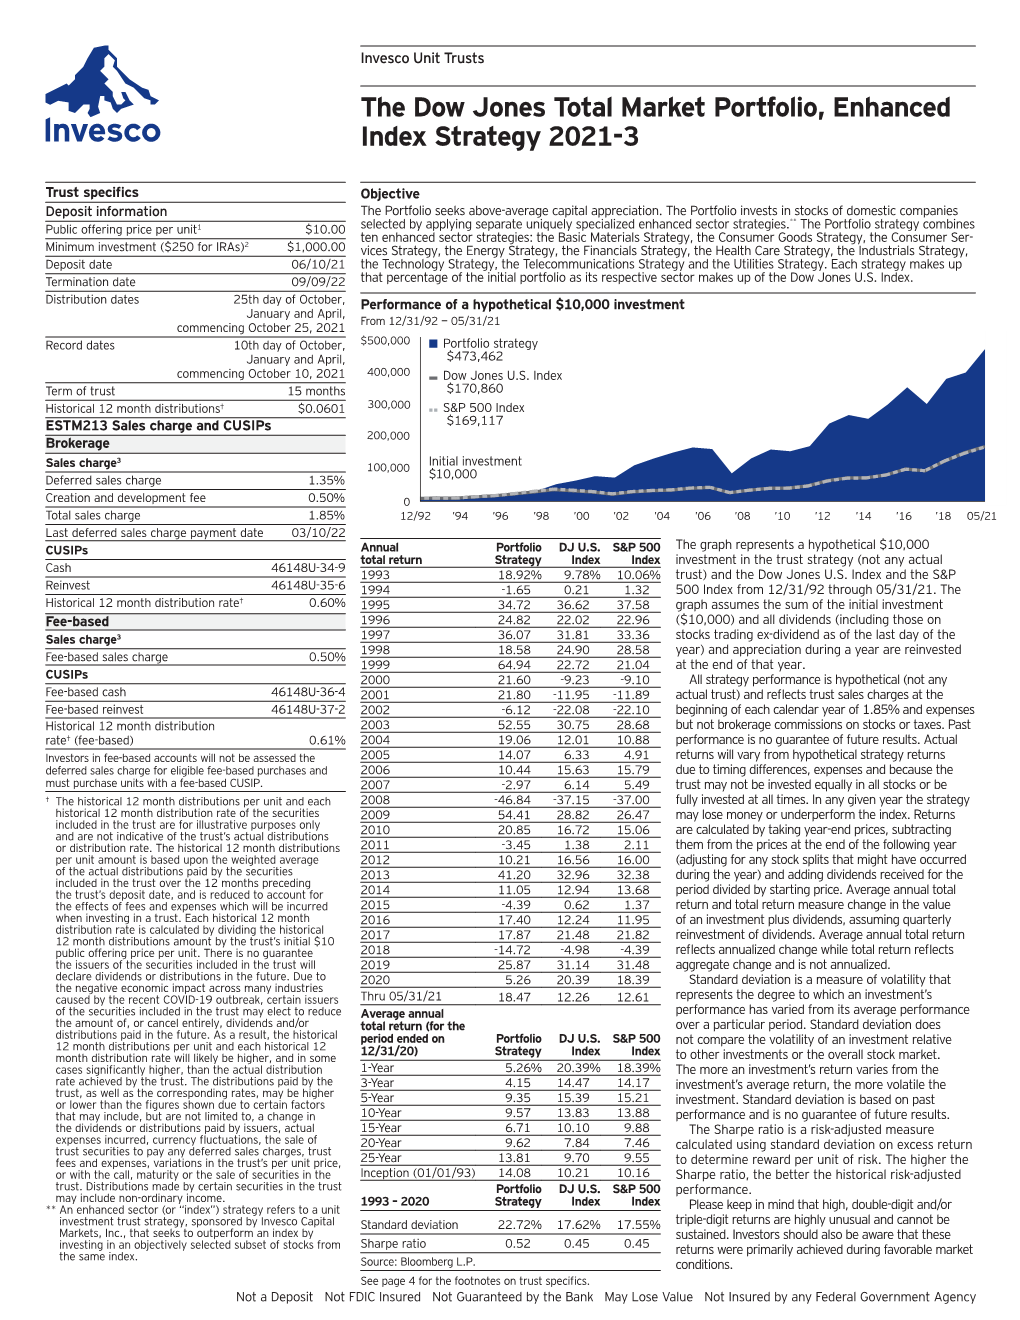 The Dow Jones Total Market Portfolio, Enhanced Index Strategy 2021-3